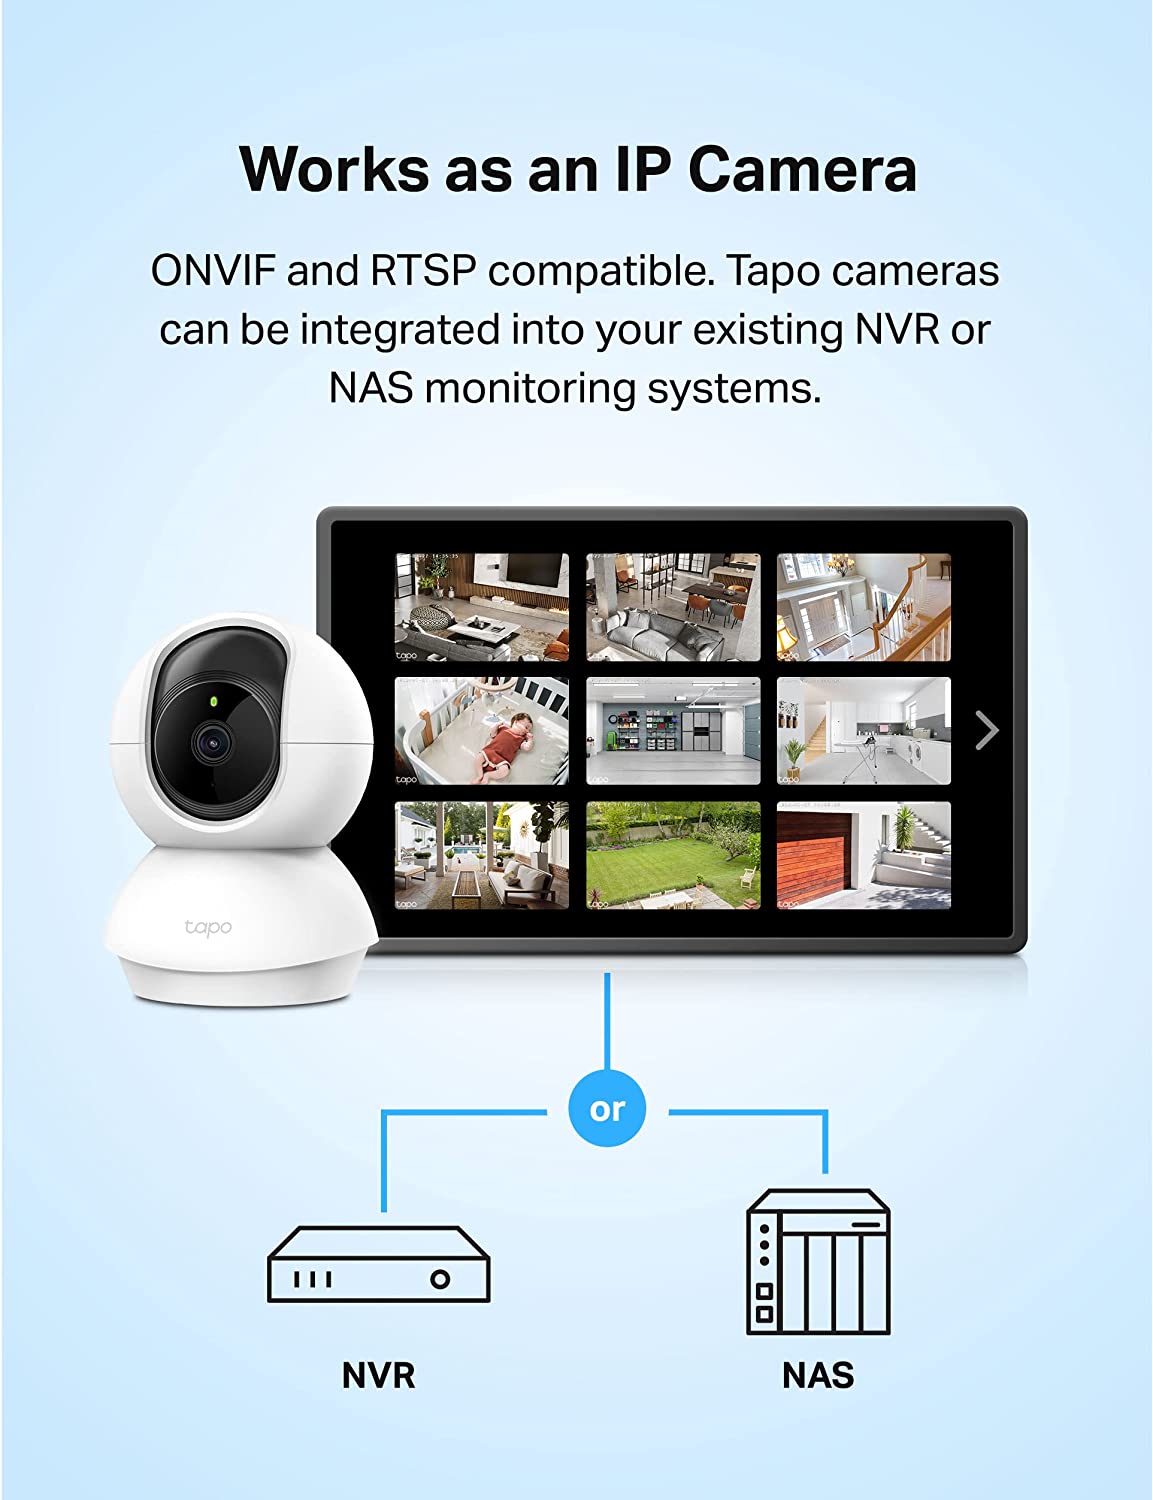 TP-Link Tapo C200, Pan/Tilt Home Security WiFi Camera